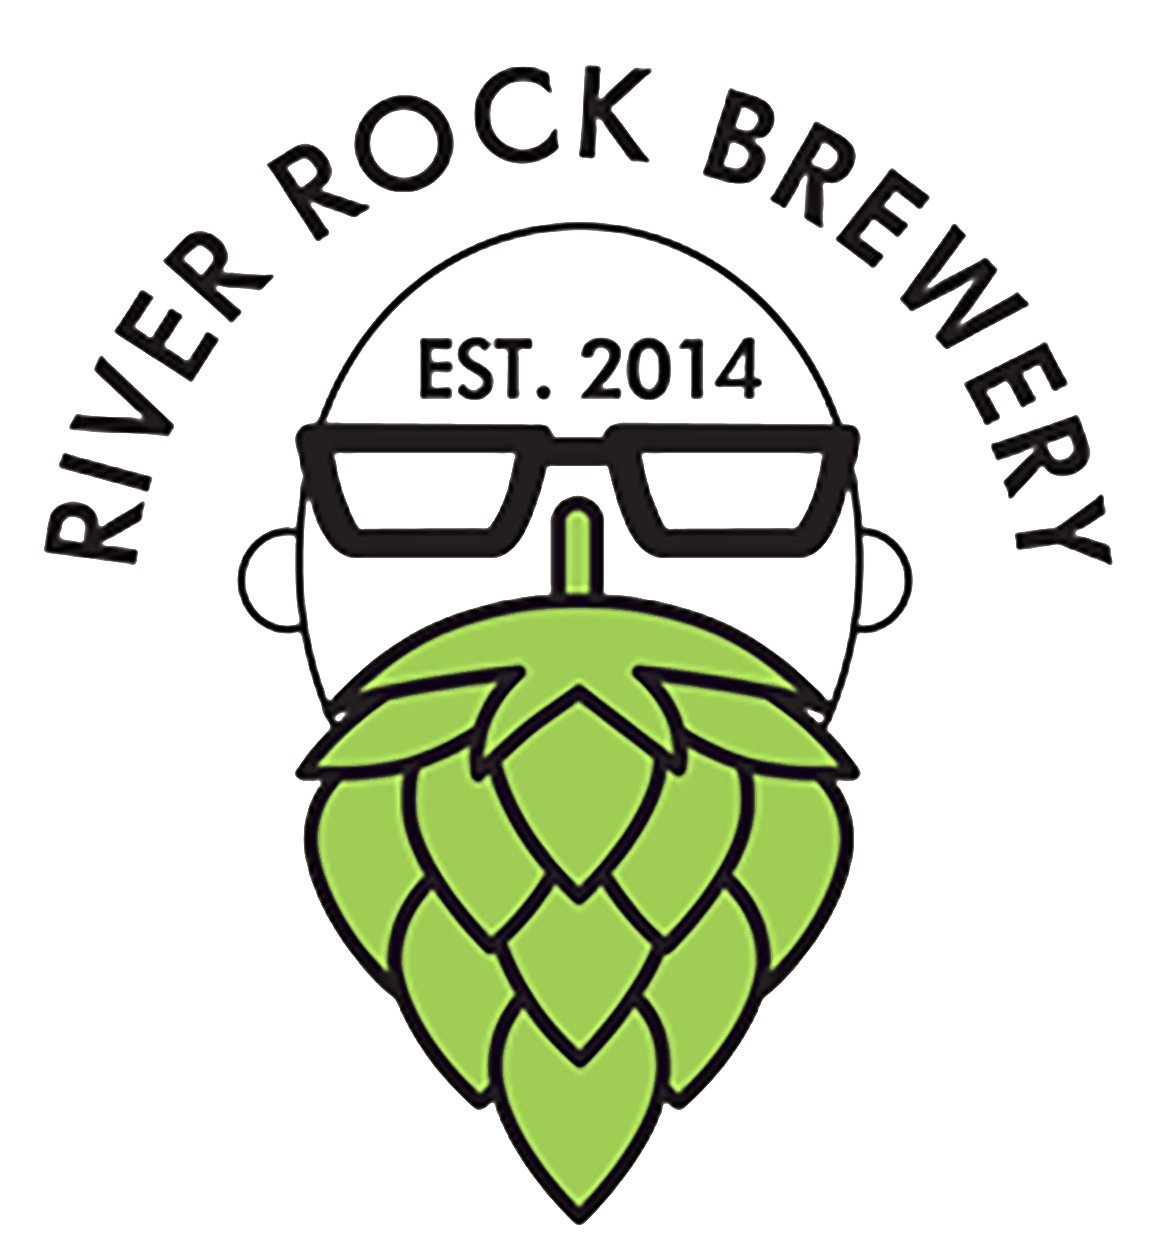 River Rock Brewery